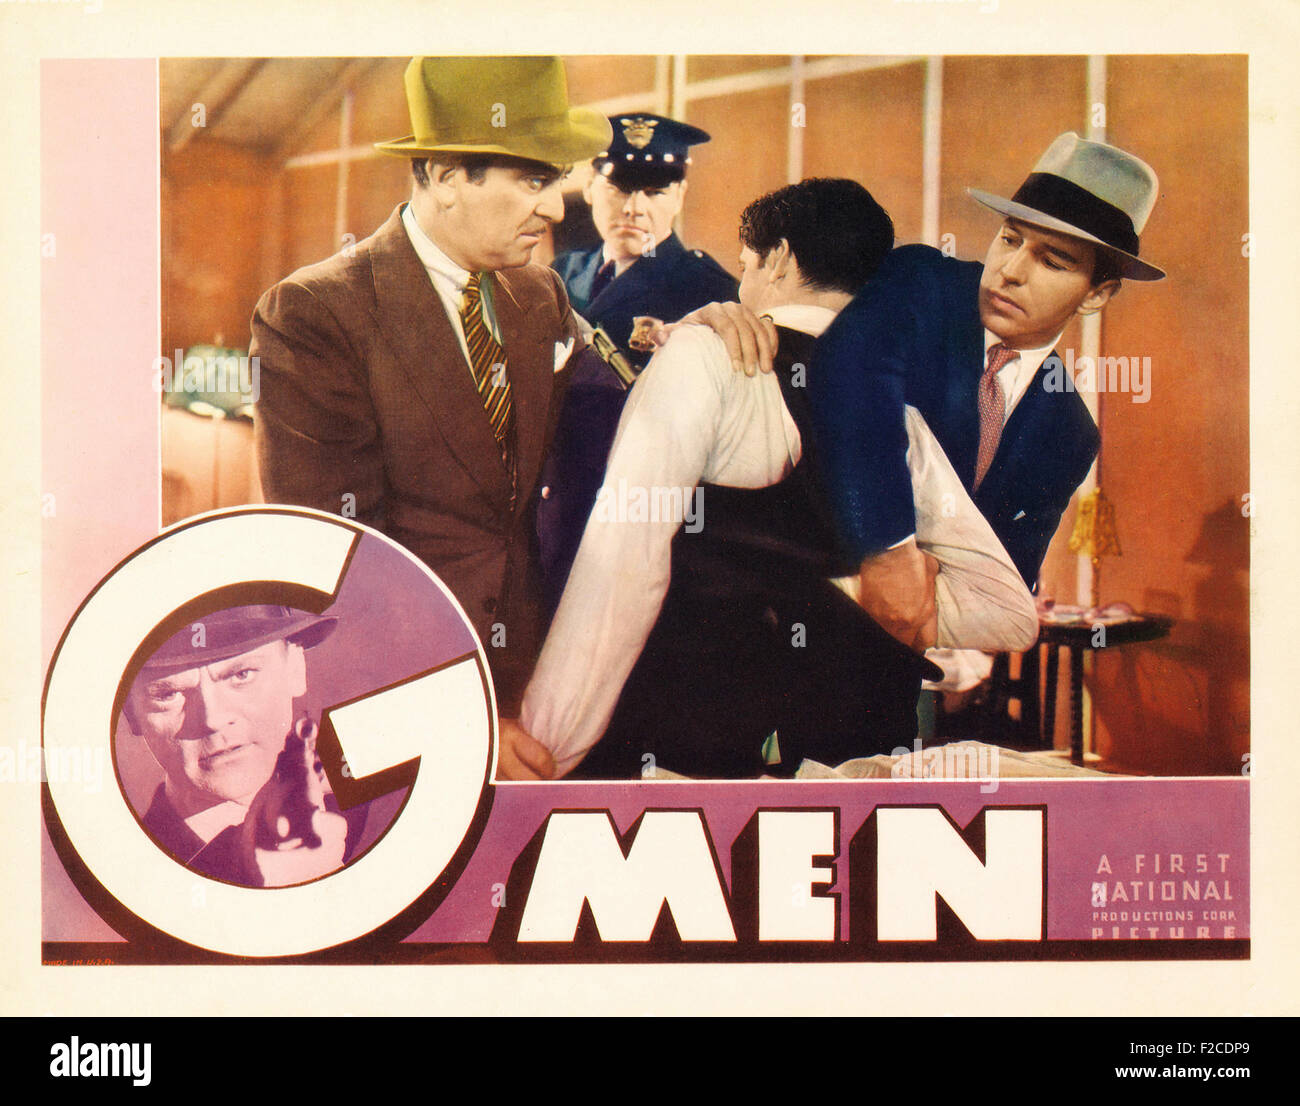 G Men   - Movie Poster Stock Photo